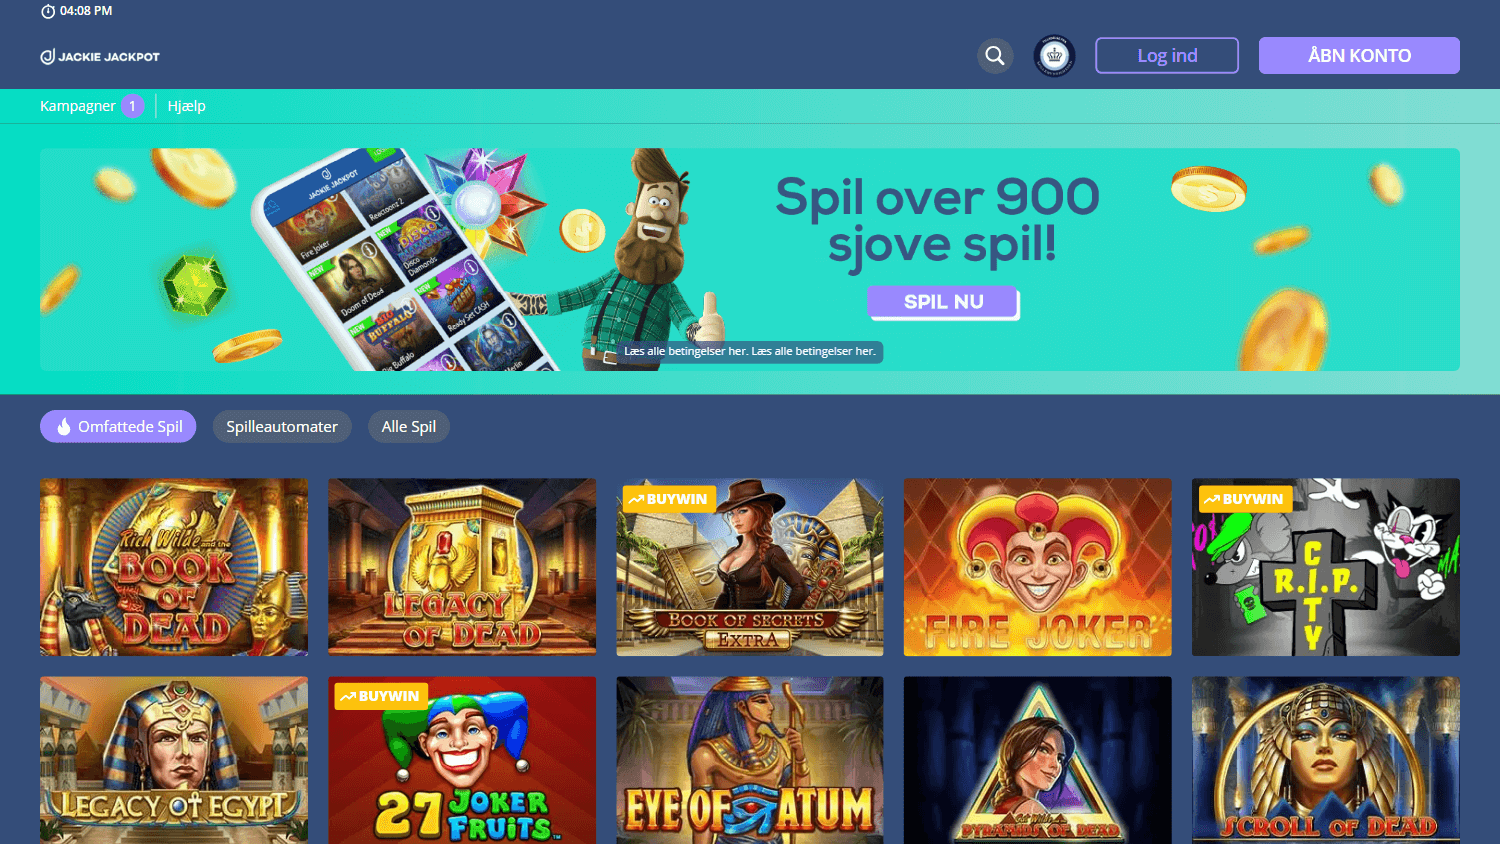 jackie_jackpot_casino_dk_homepage_desktop